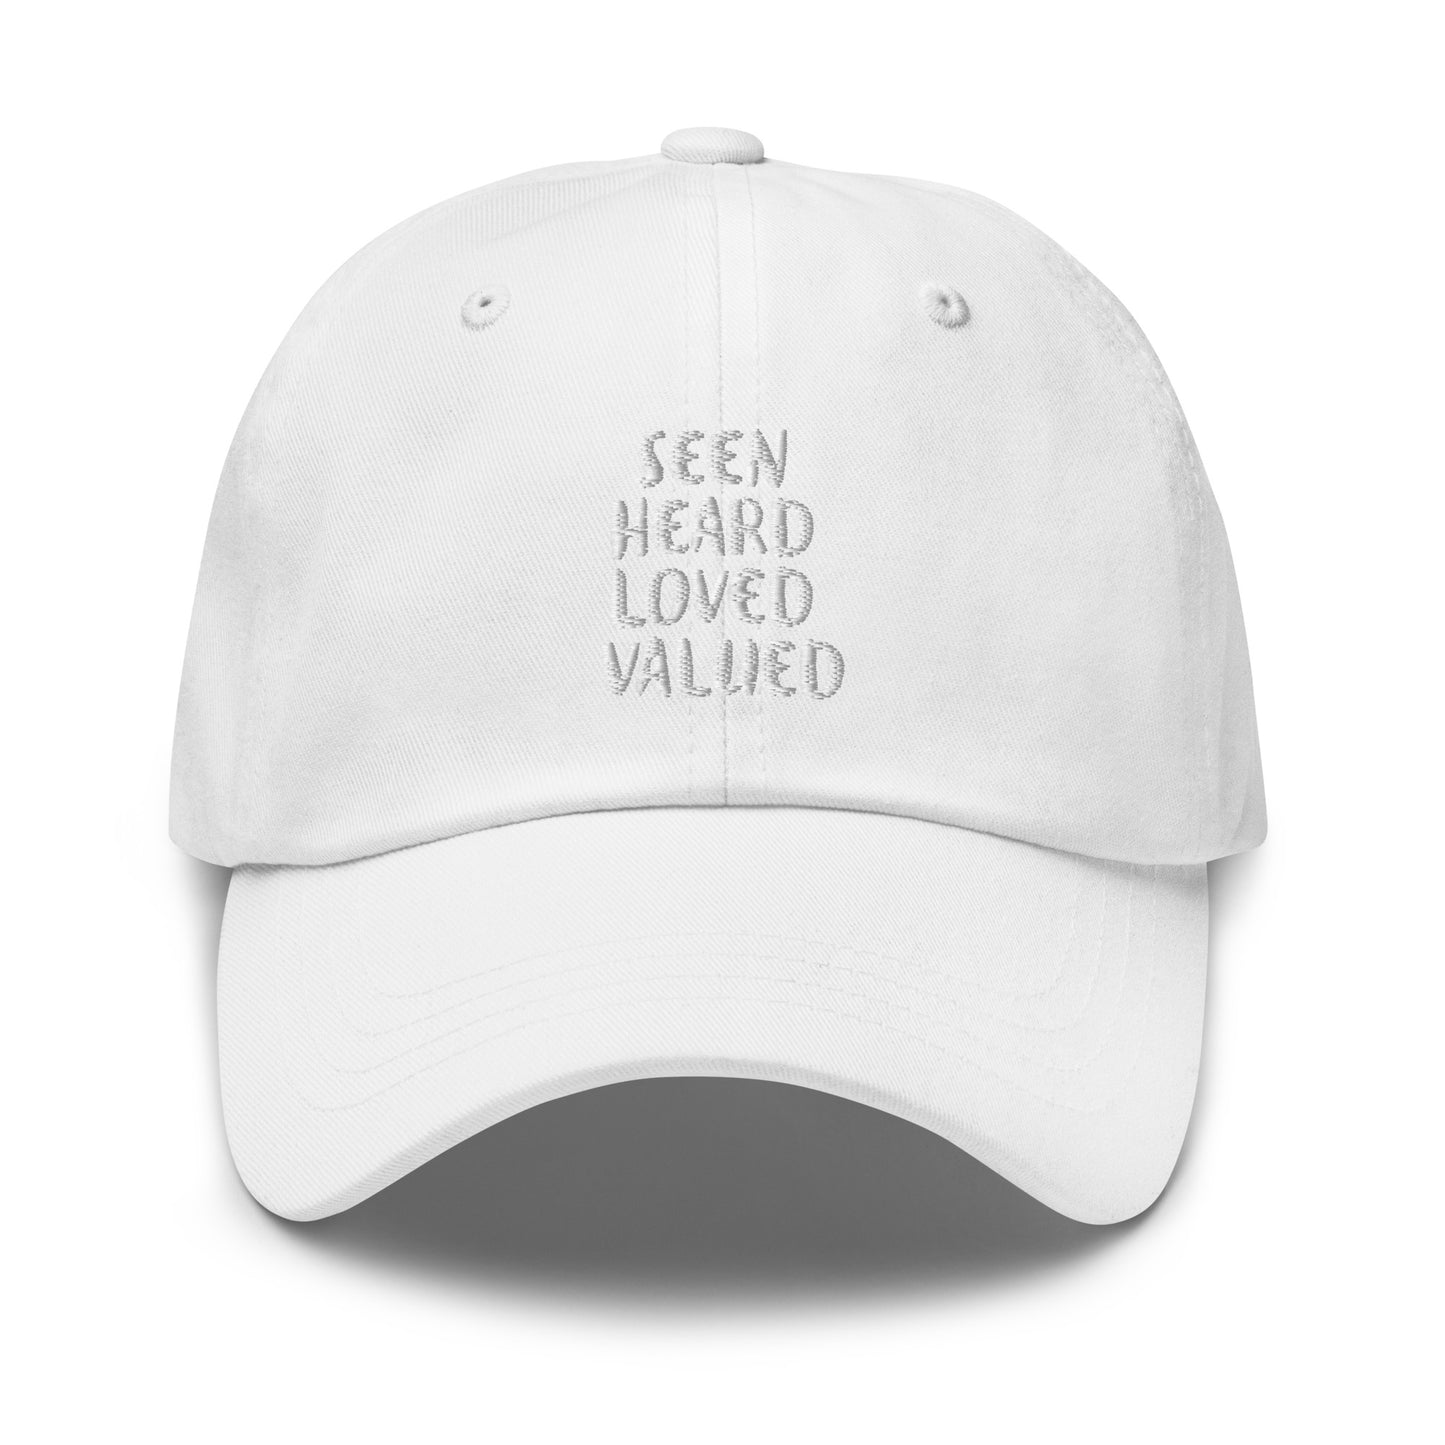 Seen Heard Loved Valued Adjustable Hat